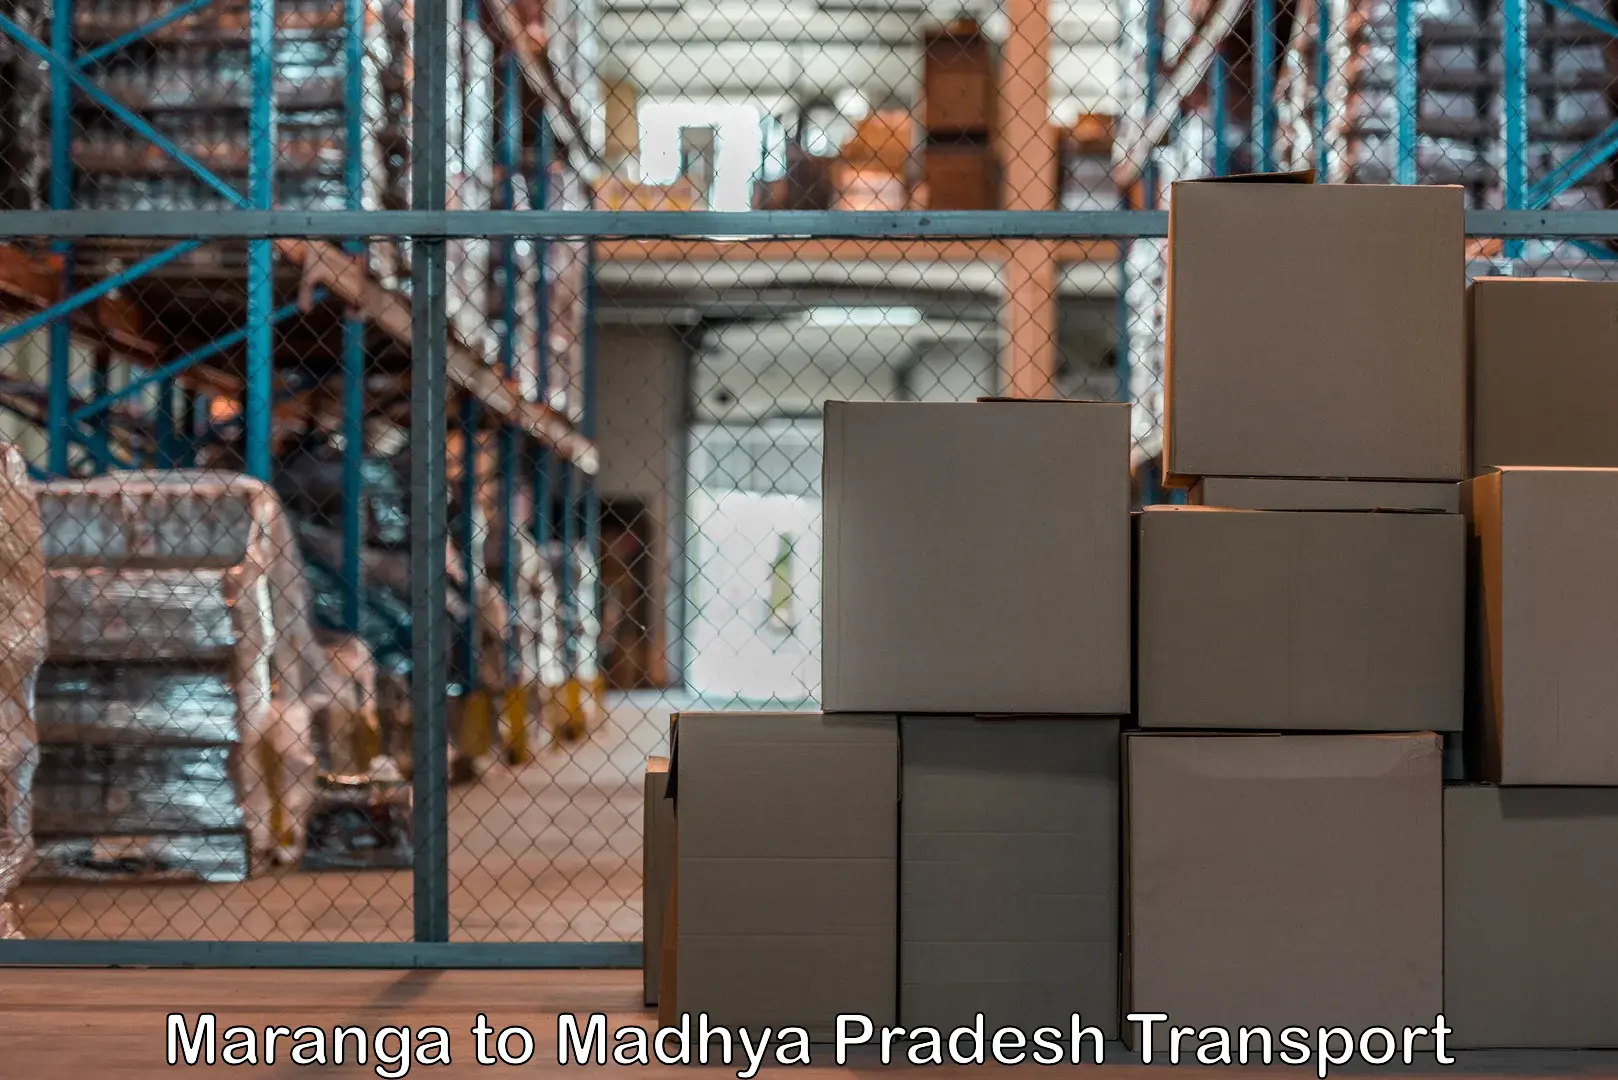 Truck transport companies in India Maranga to Bhopal